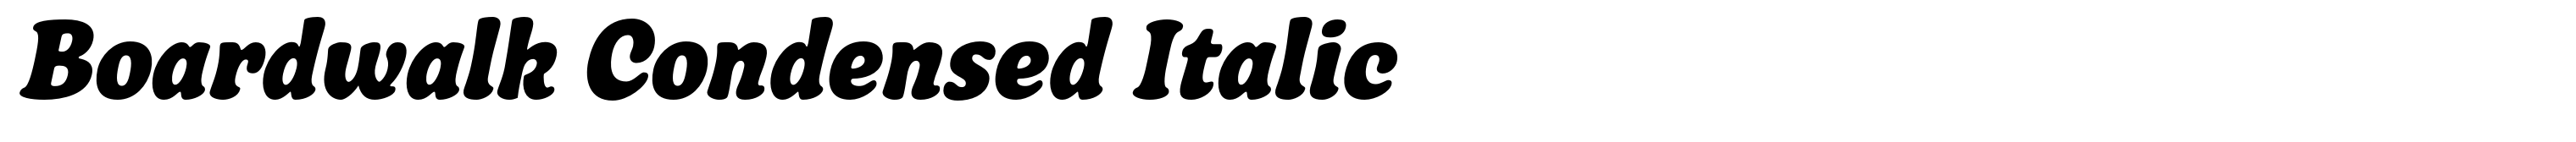 Boardwalk Condensed Italic